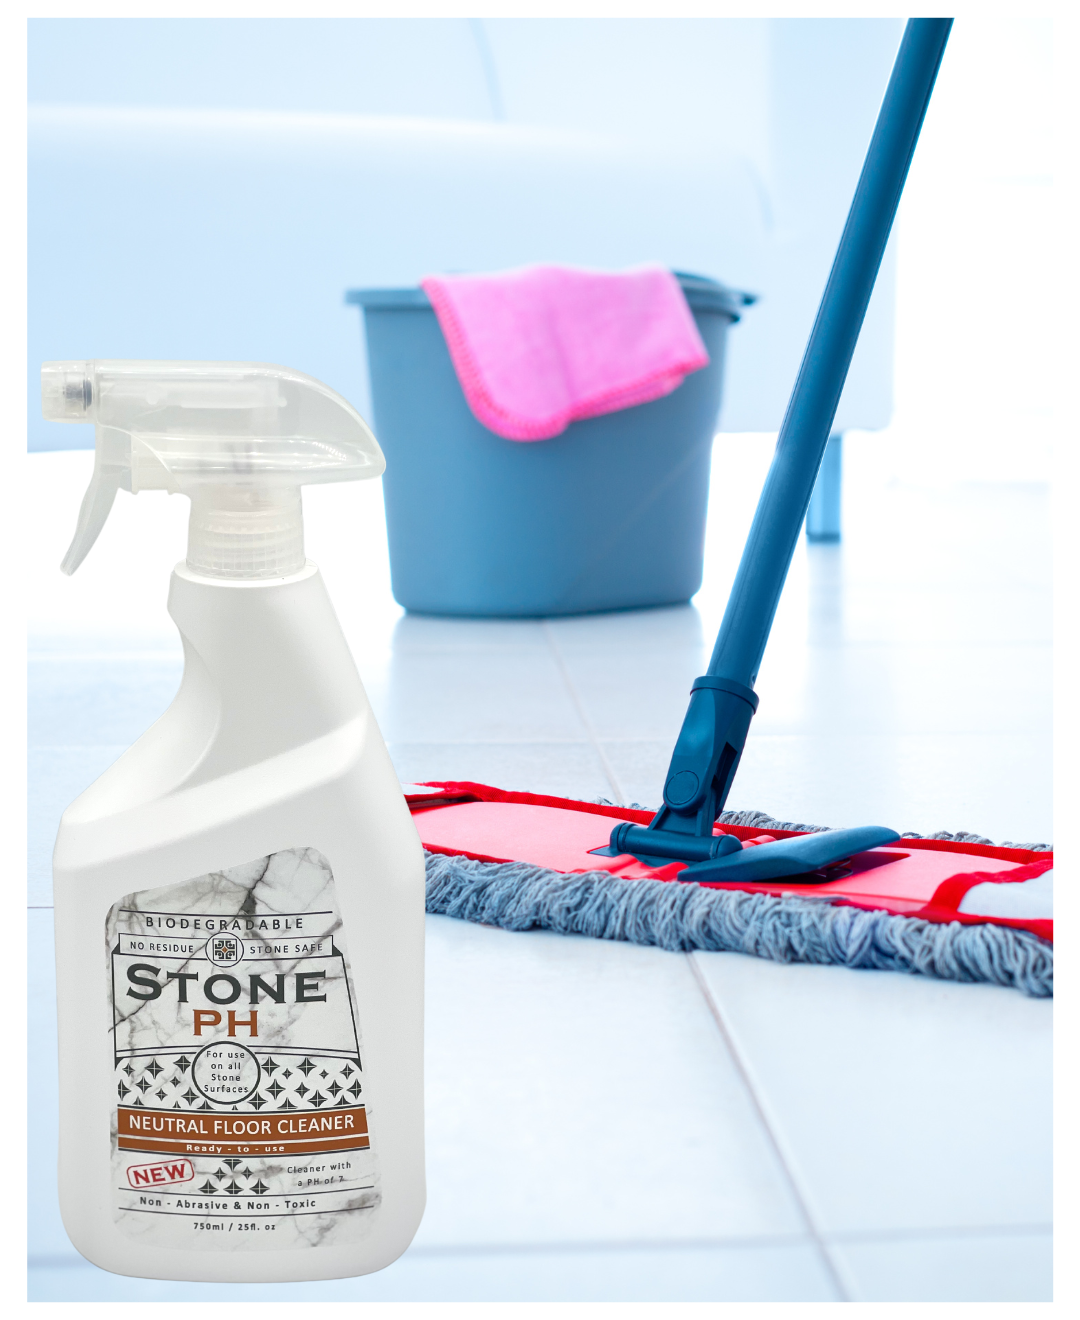 STONE PH Neutral Floor Cleaner